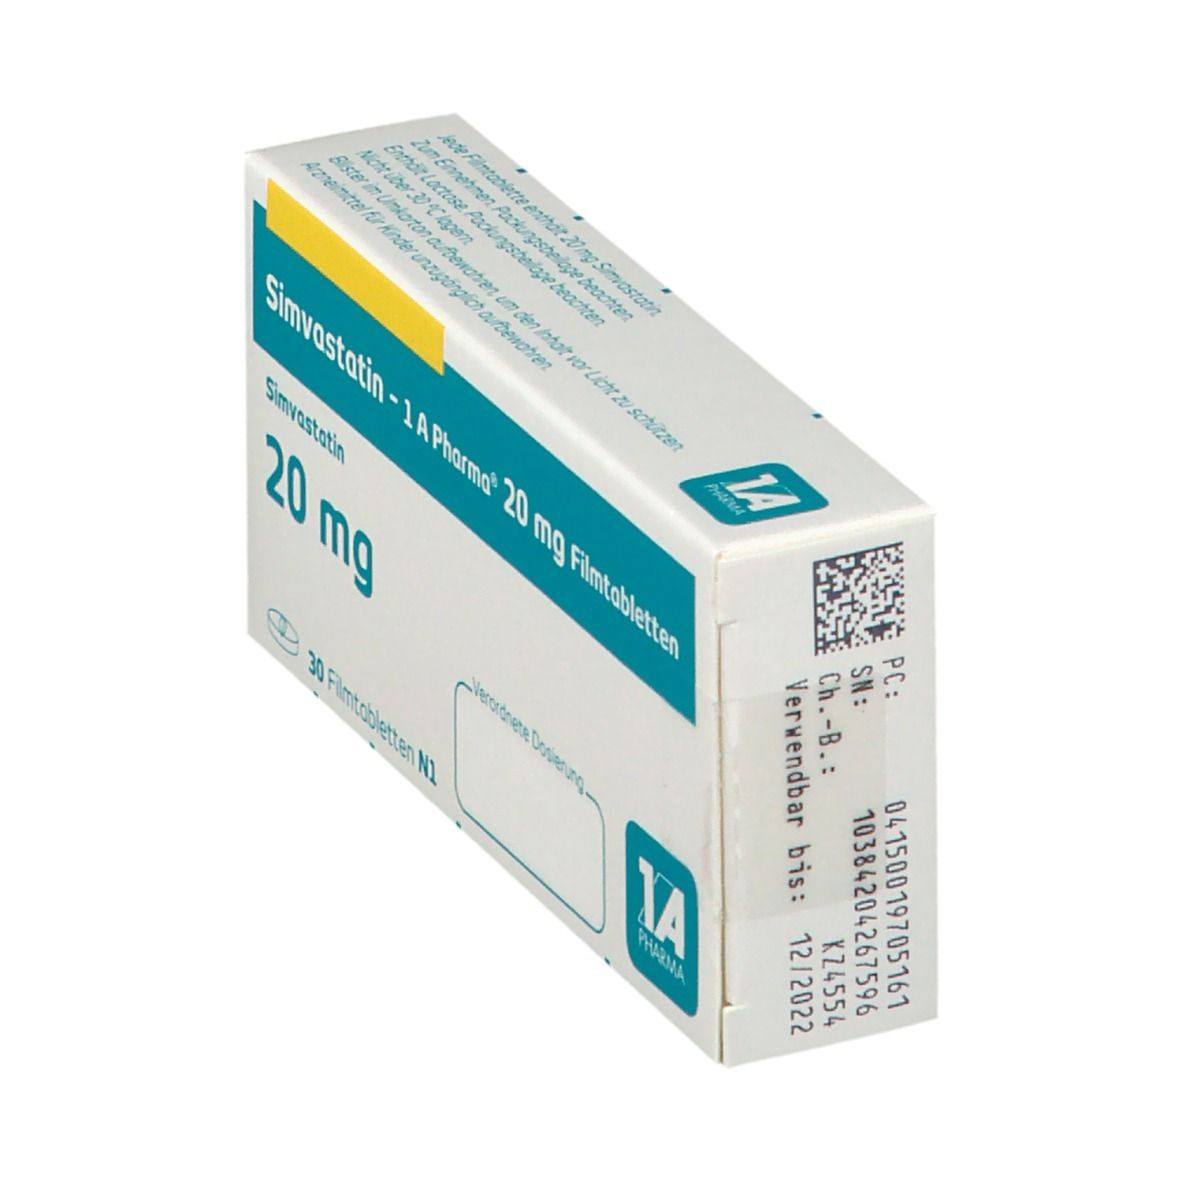 Simvastatin 1A Pharma® 20Mg